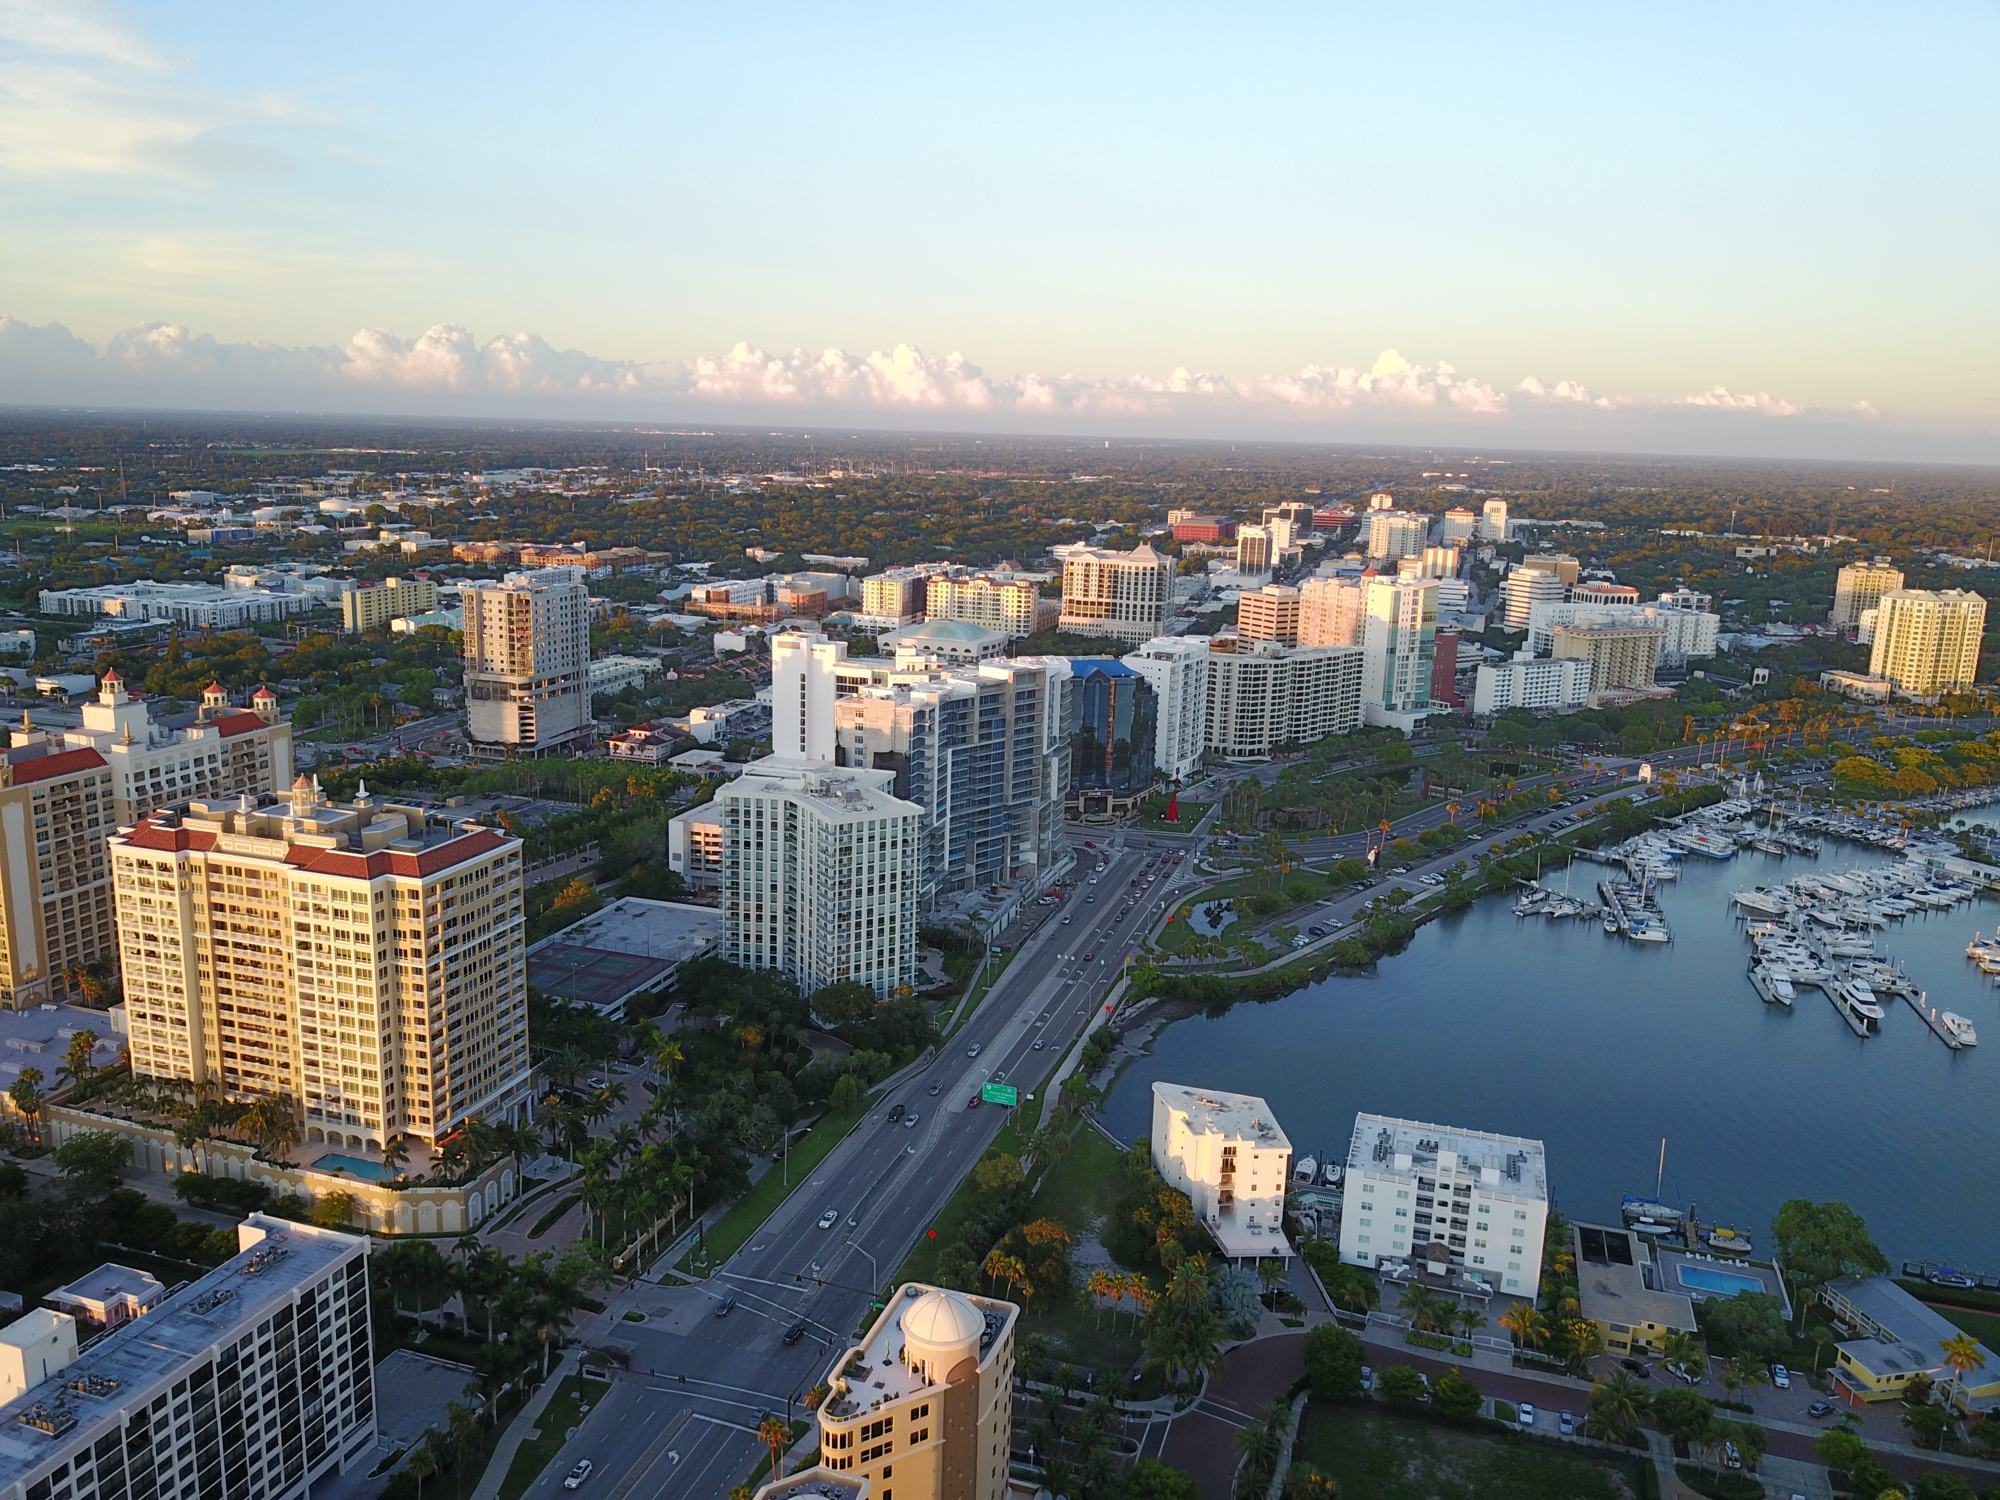 Matt Mercier. A photo of downtown Sarasota shot by Matt Mercier's drone.